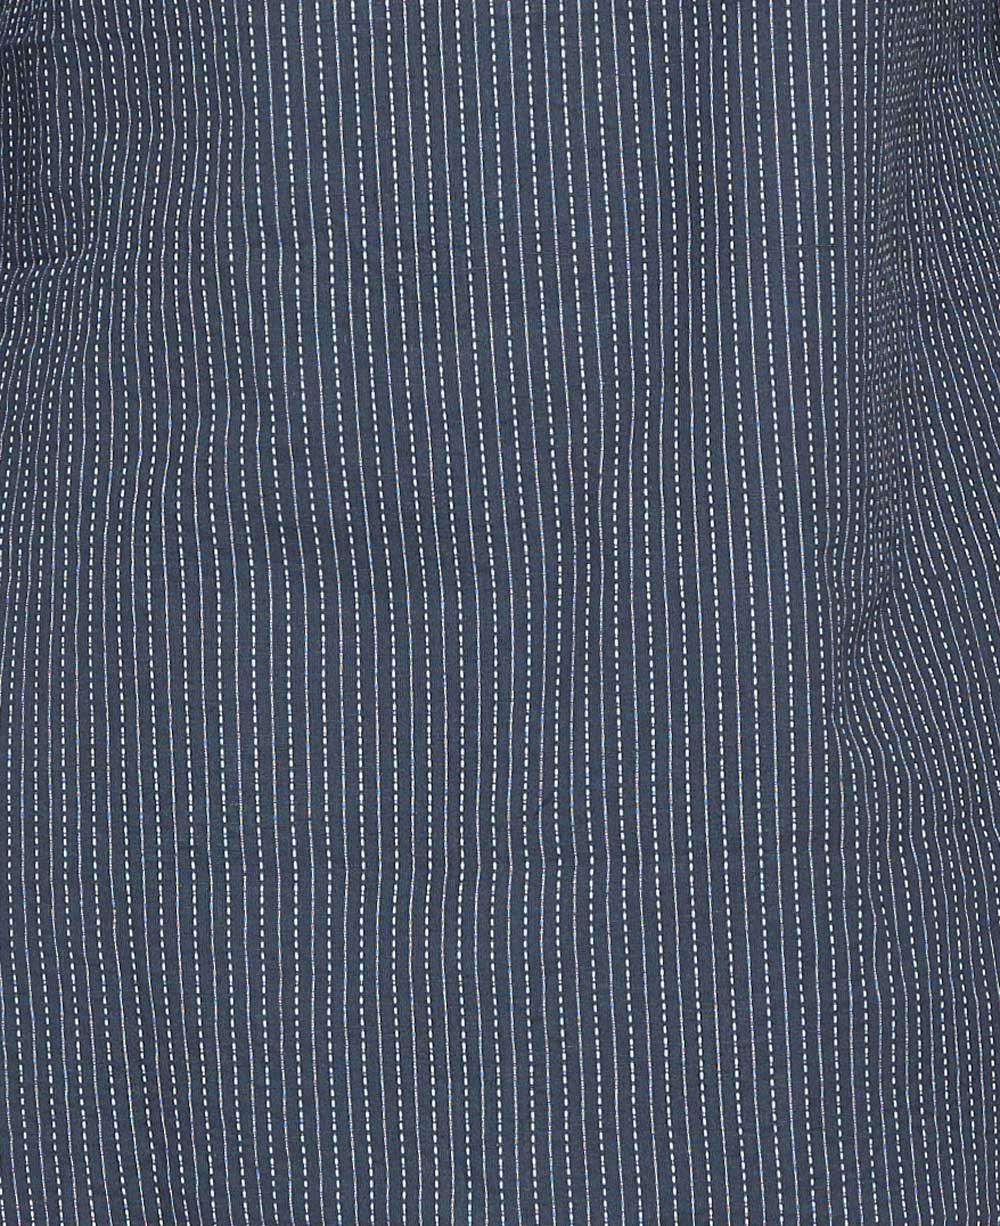 Grey Kantha Stitch Cotton Tunic Top - Shirts & Tops S